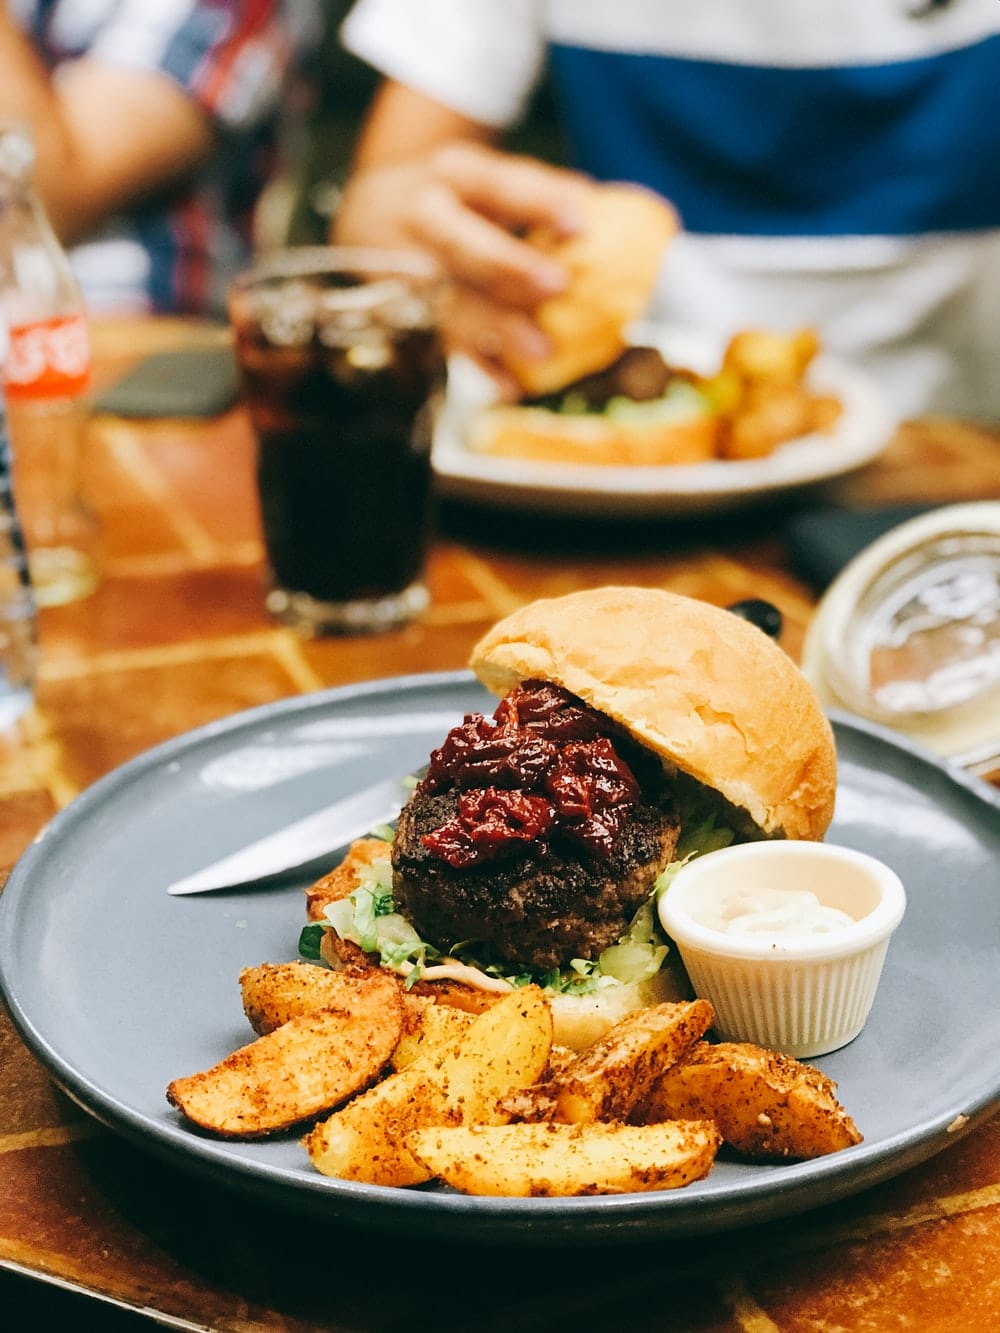 Cross Stitch | Asp - Burger On Plate - Cross Stitched